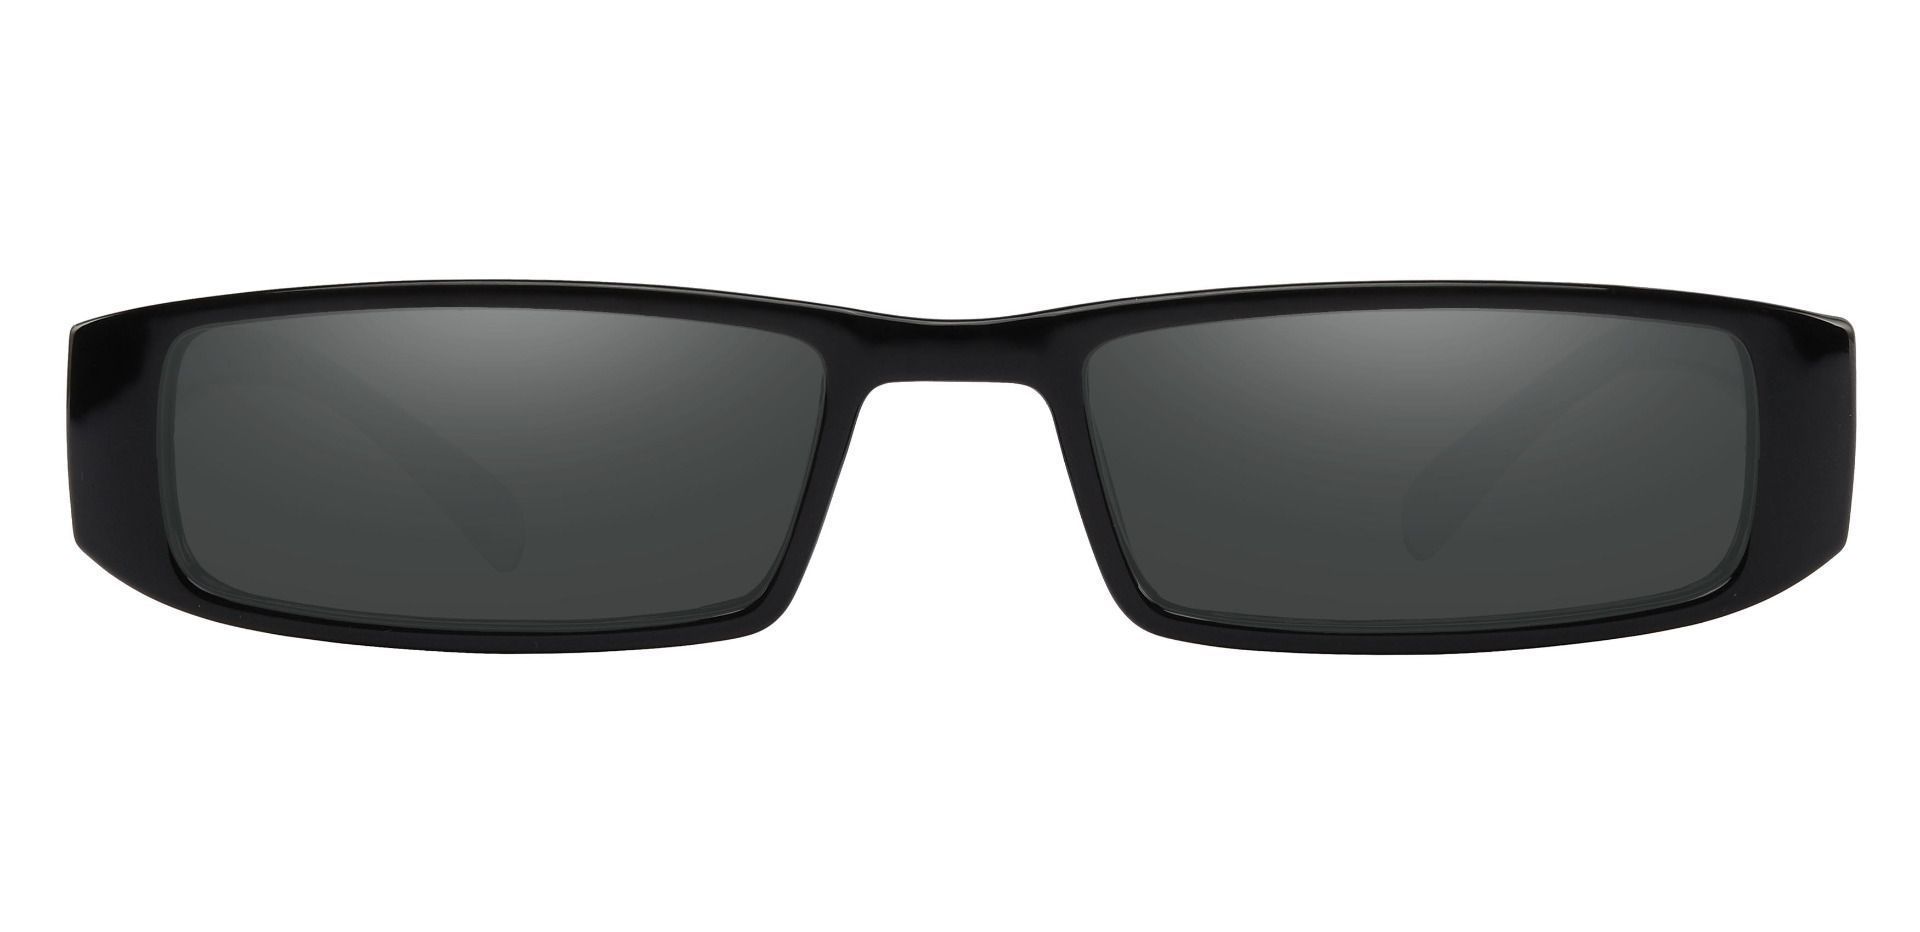 Buccaneer Rectangle Reading Sunglasses - Black Frame With Gray Lenses